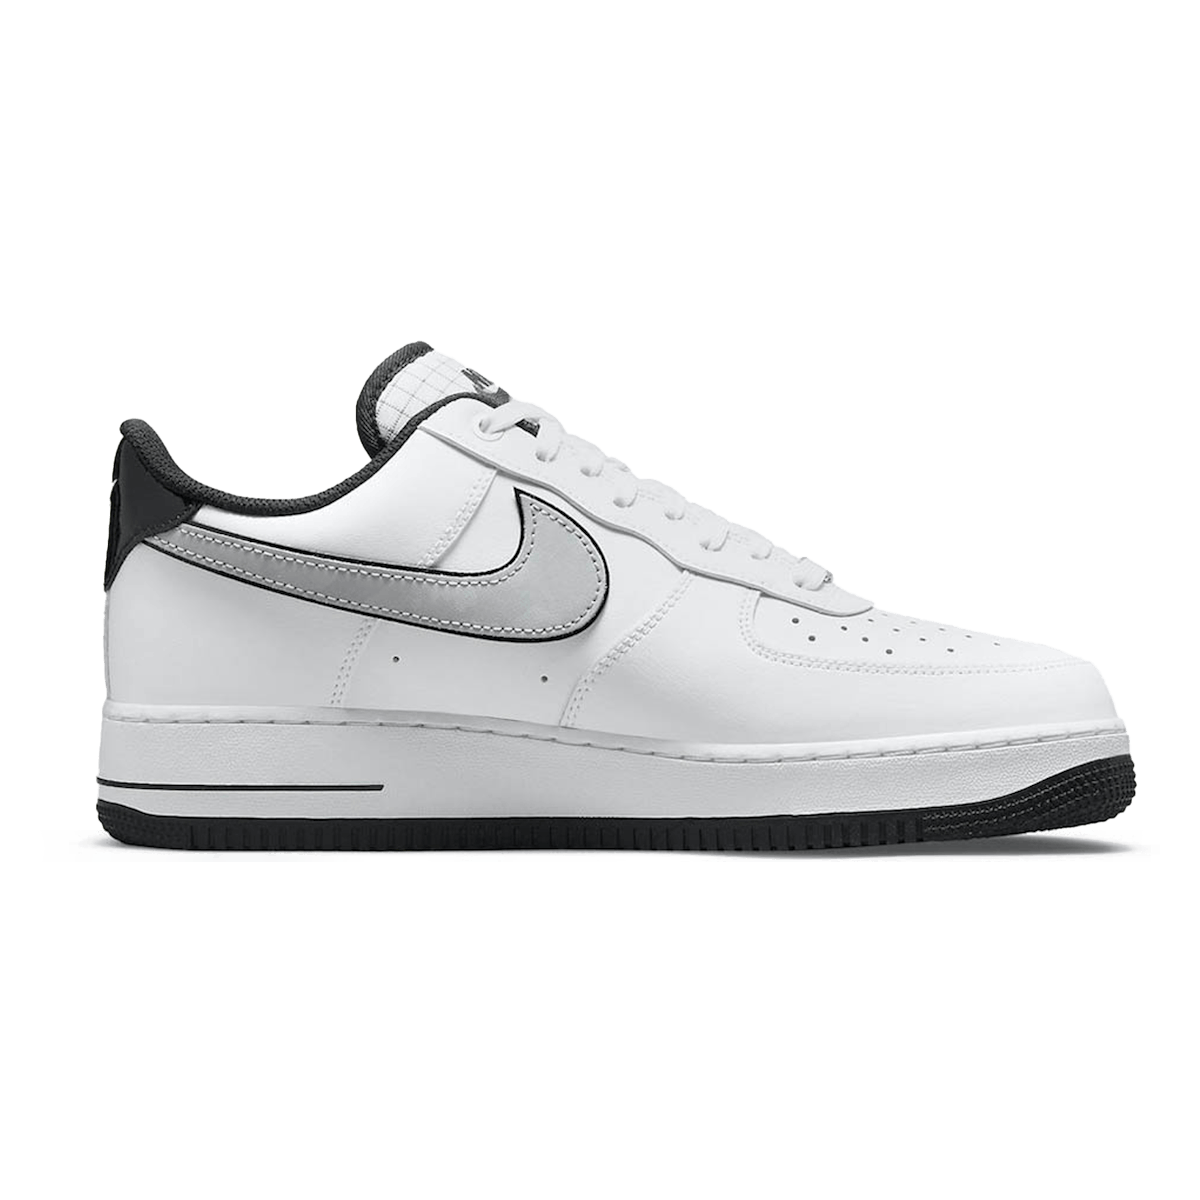 Nike Air Force 1 Low "White/Black"